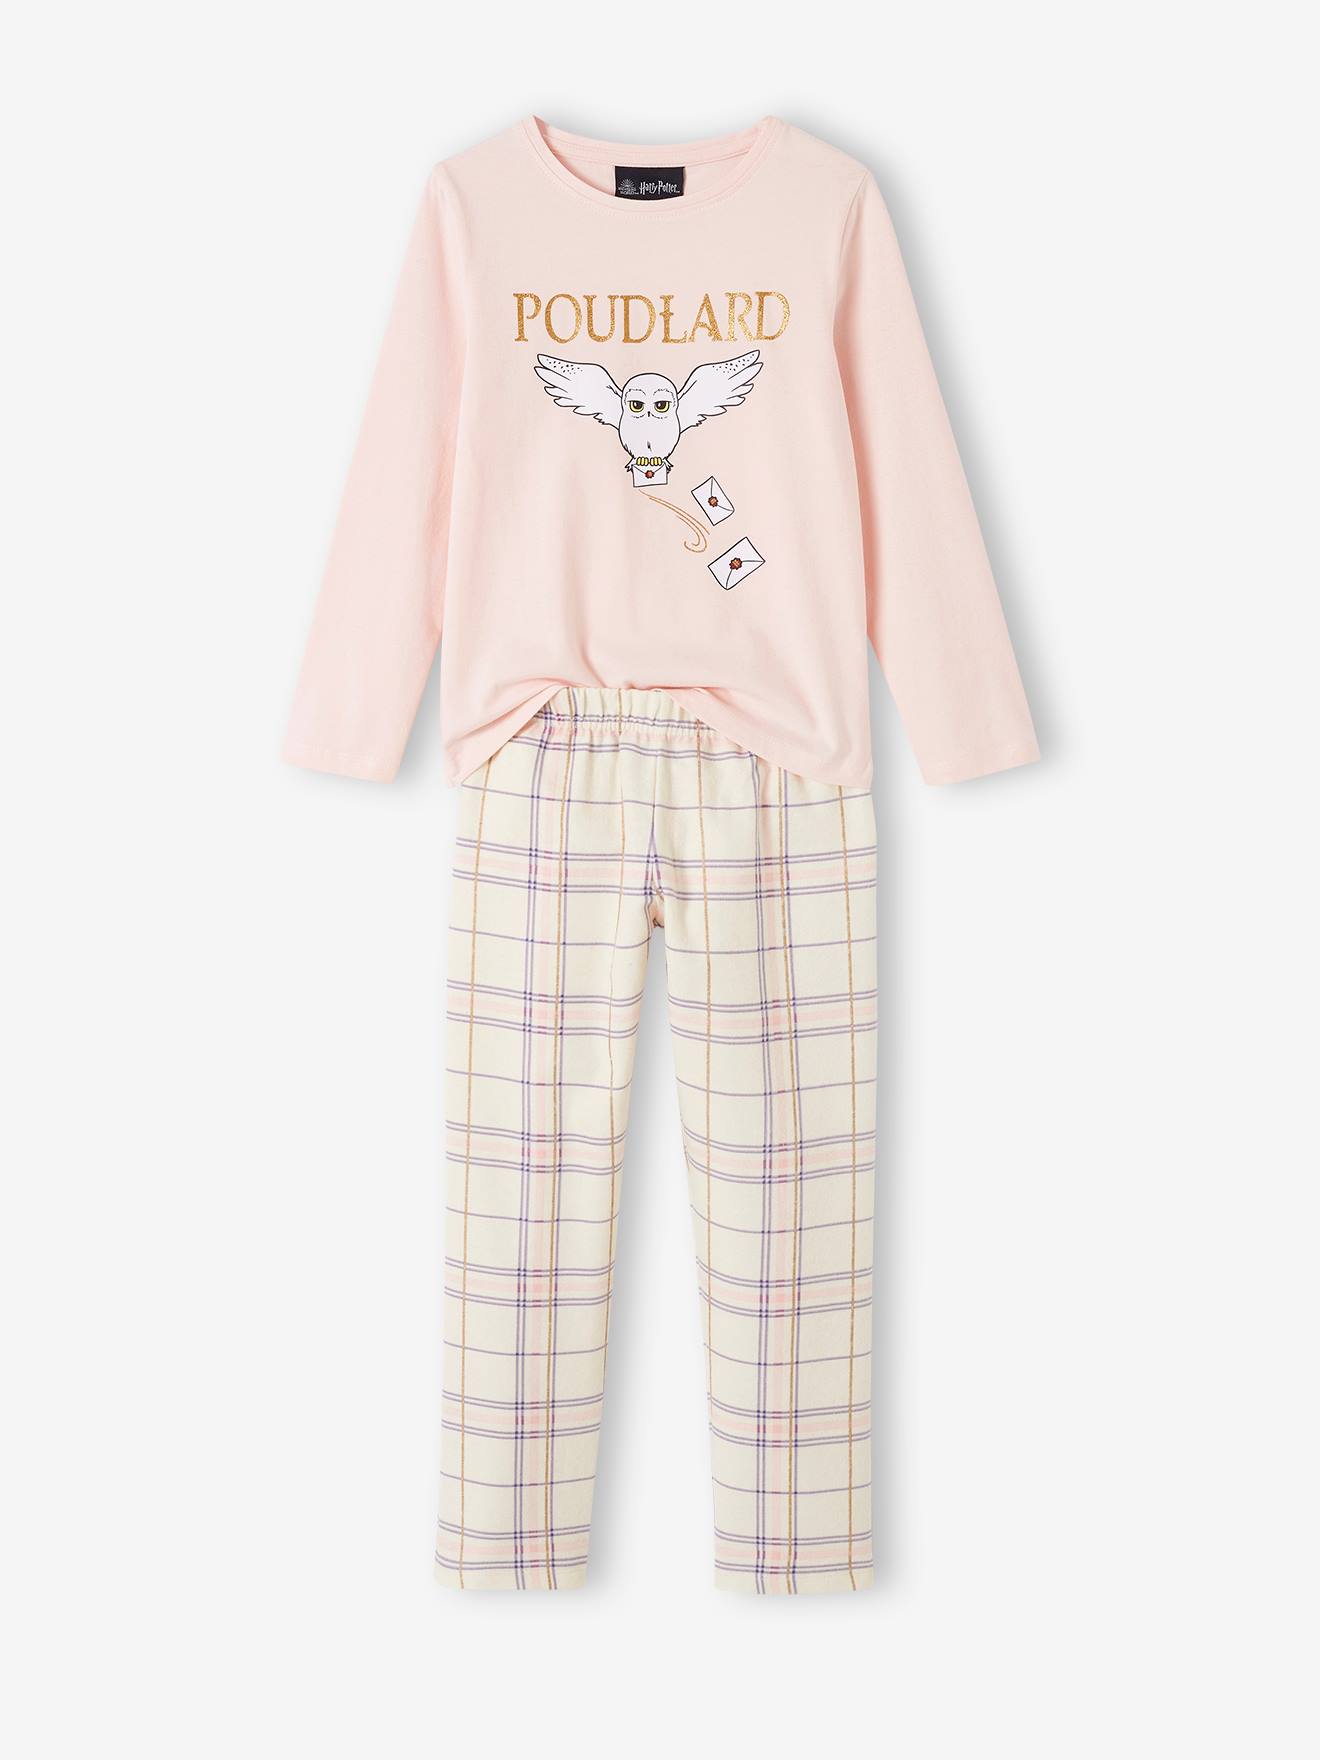 Harry Potter(r) Pyjamas for Girls pale pink